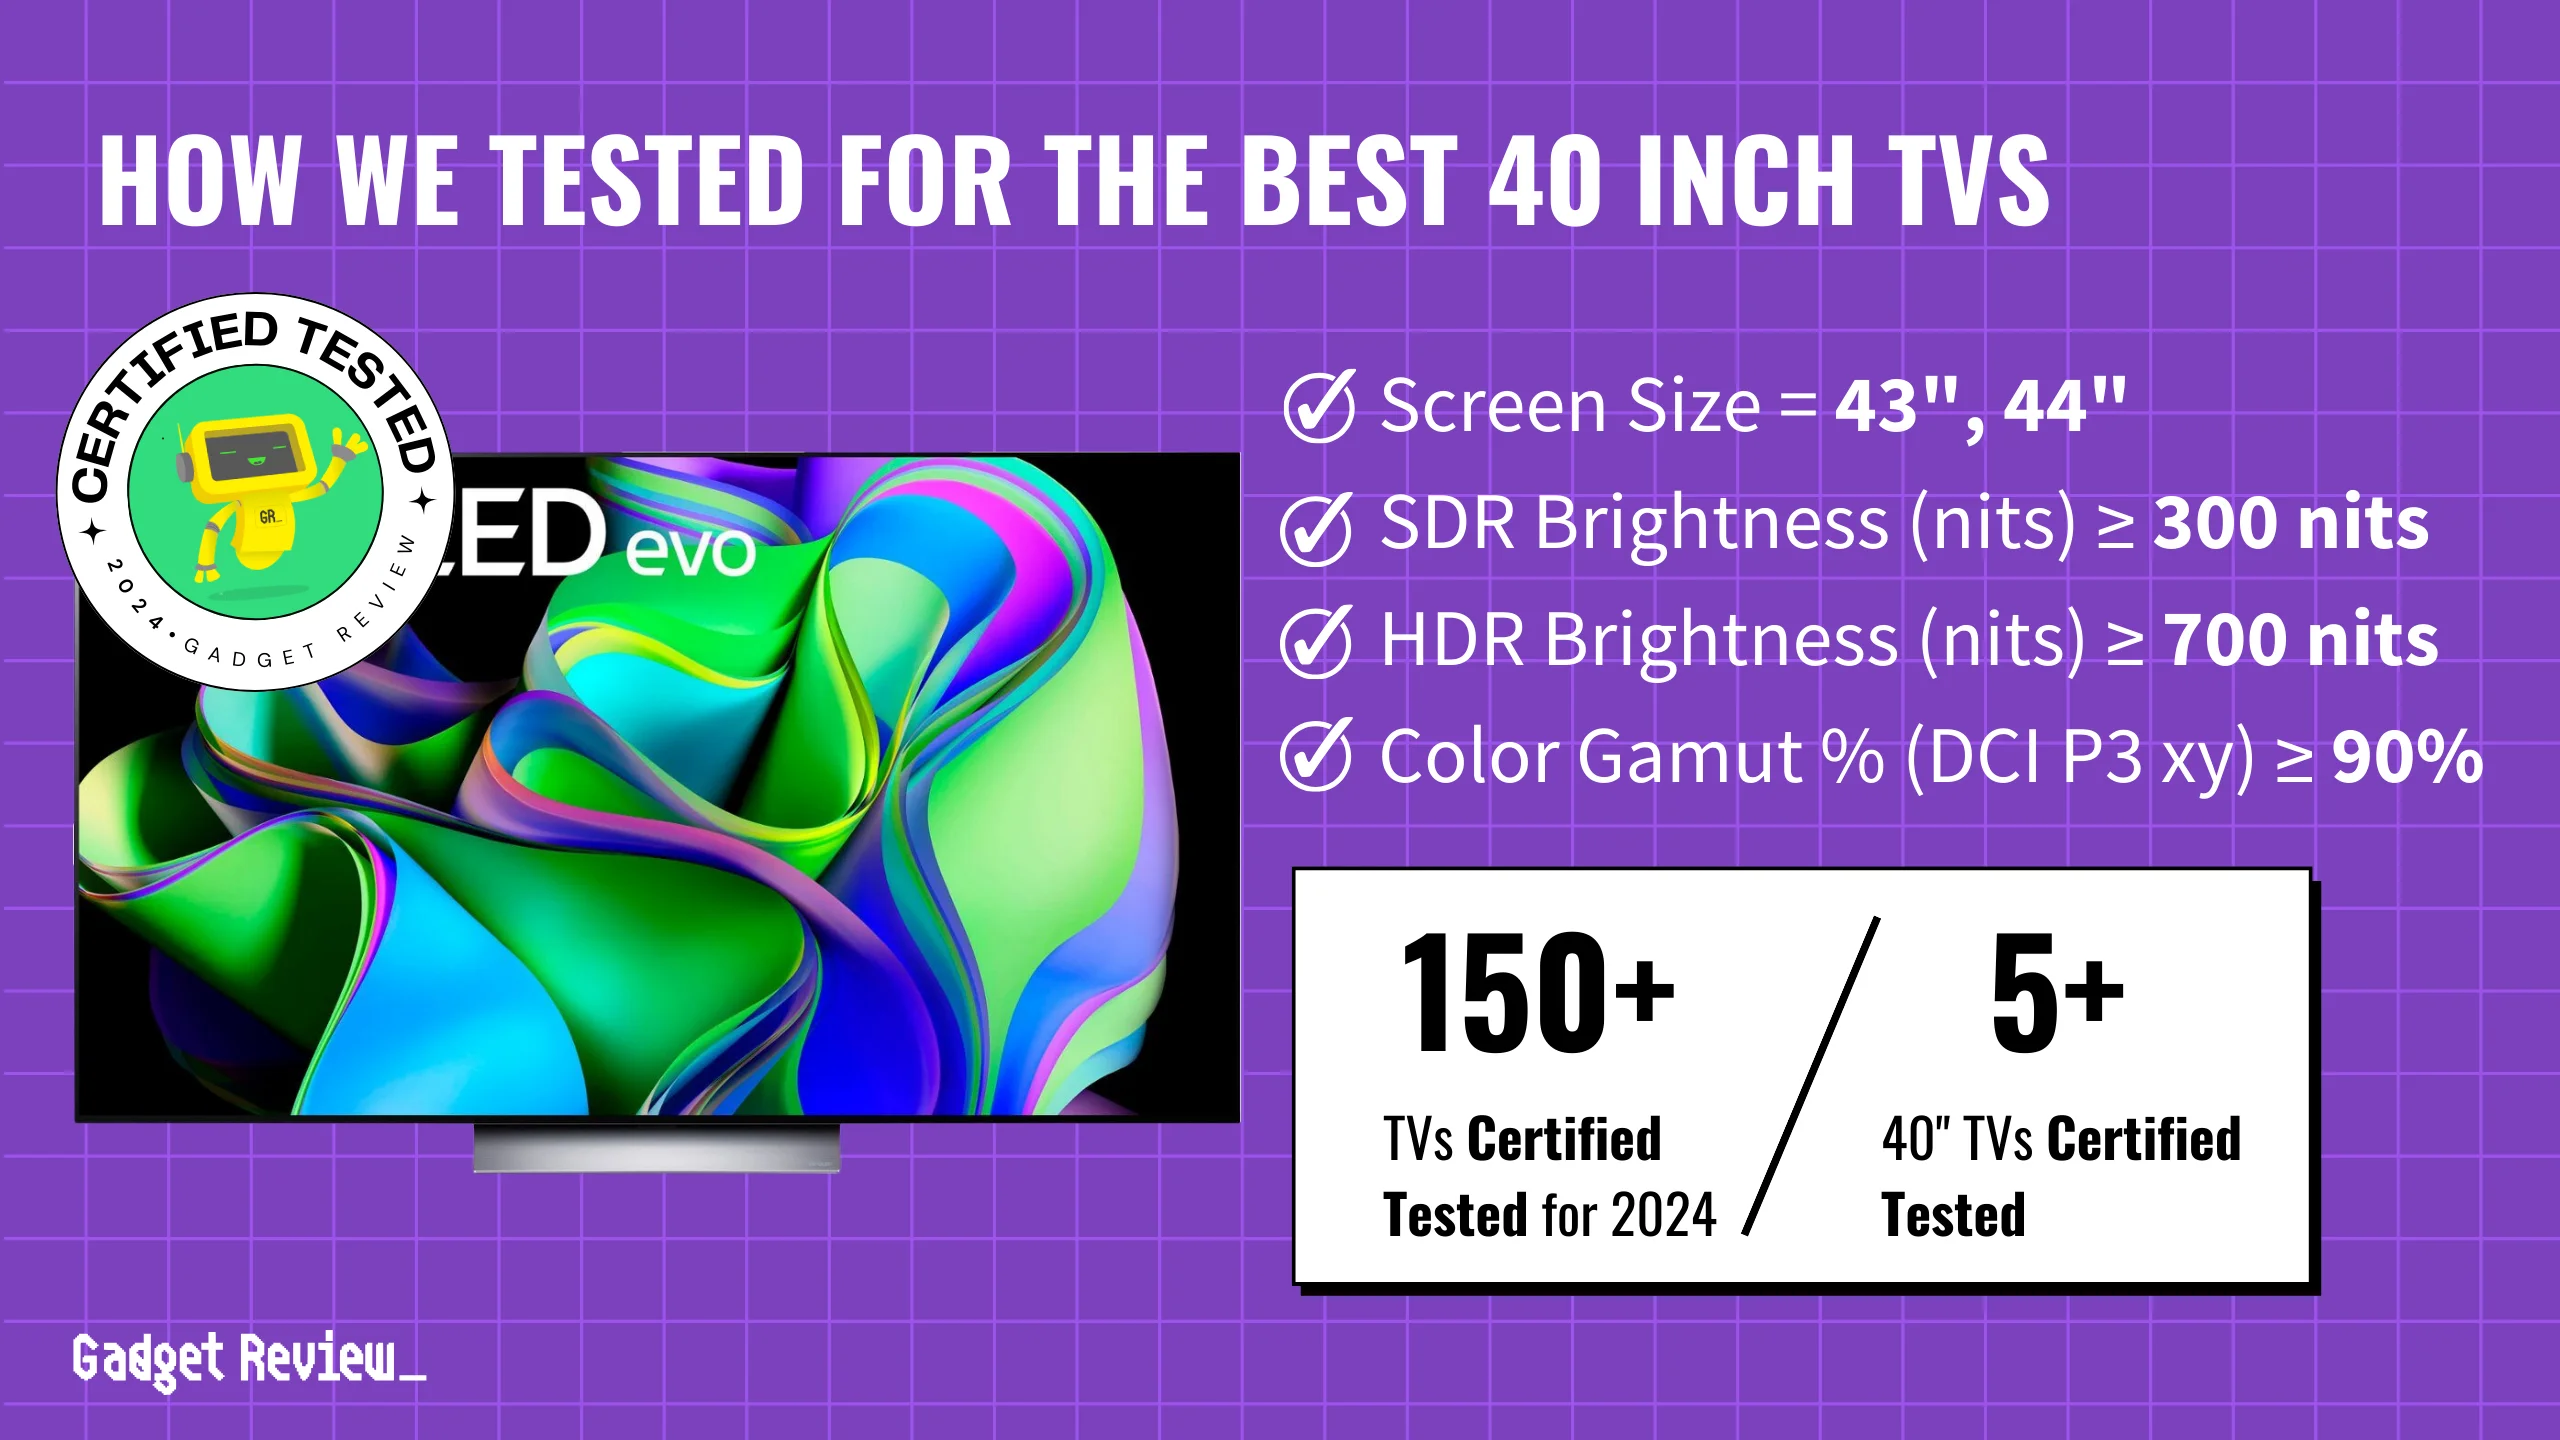 The Best 40 Inch TVs in 2024